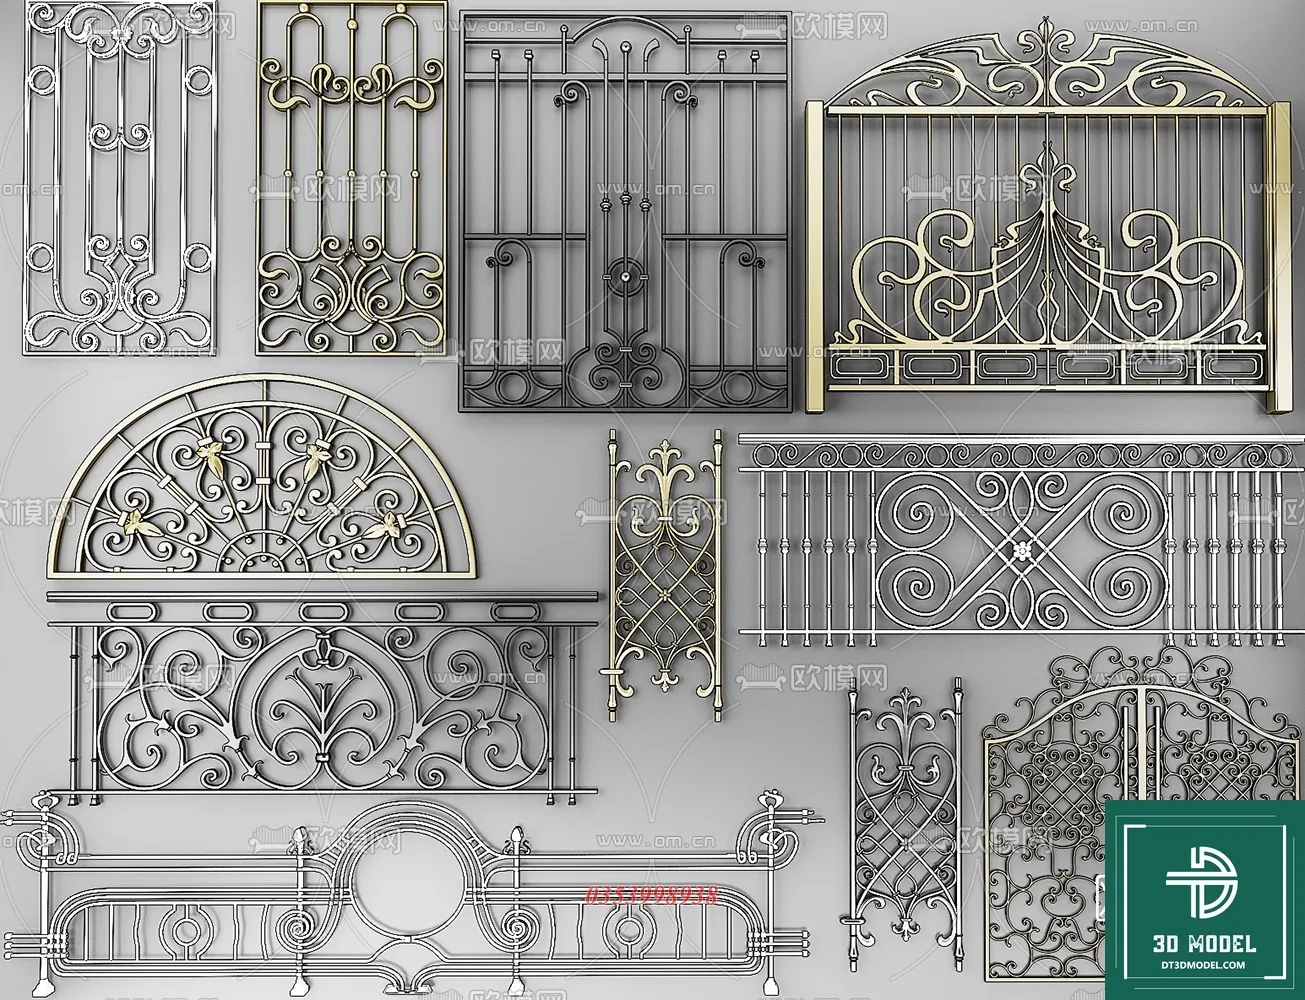 CLASSIC GATE – 3D MODELS – 012